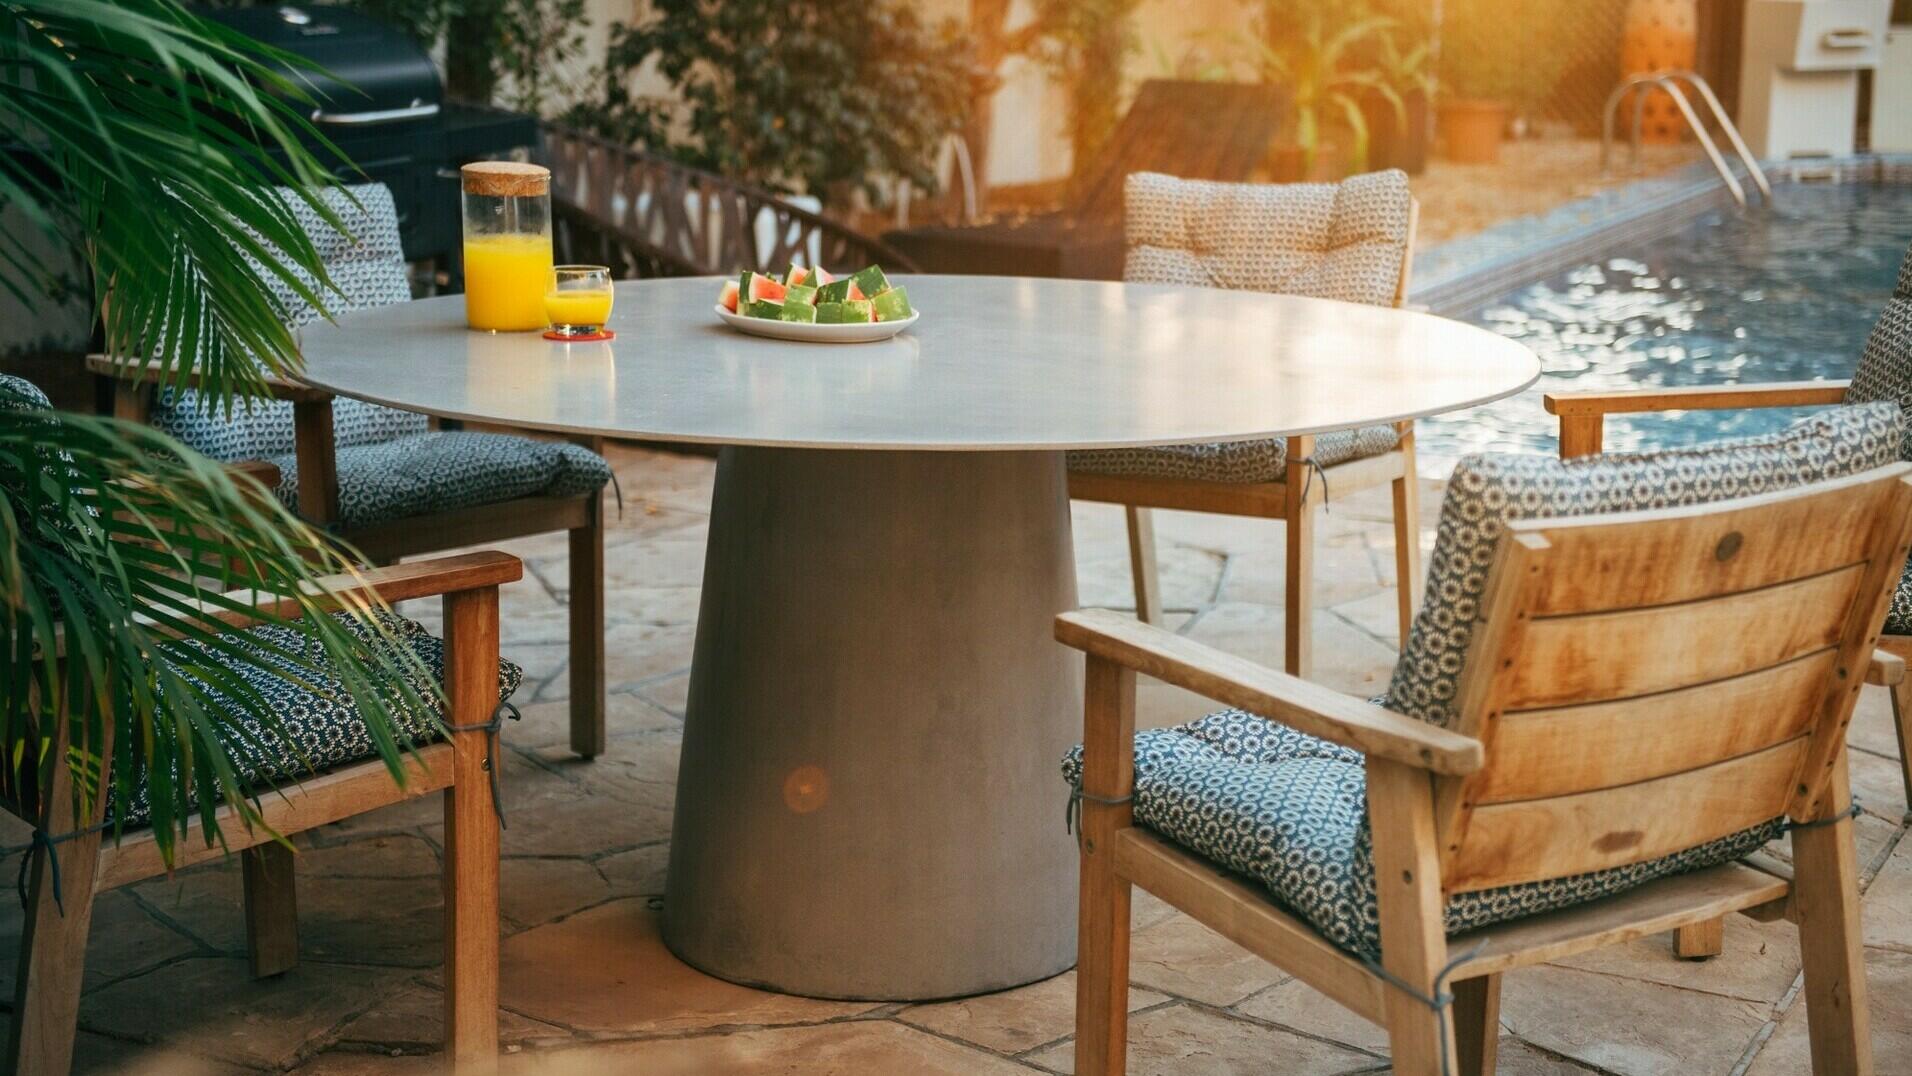 Outdoor concrete table